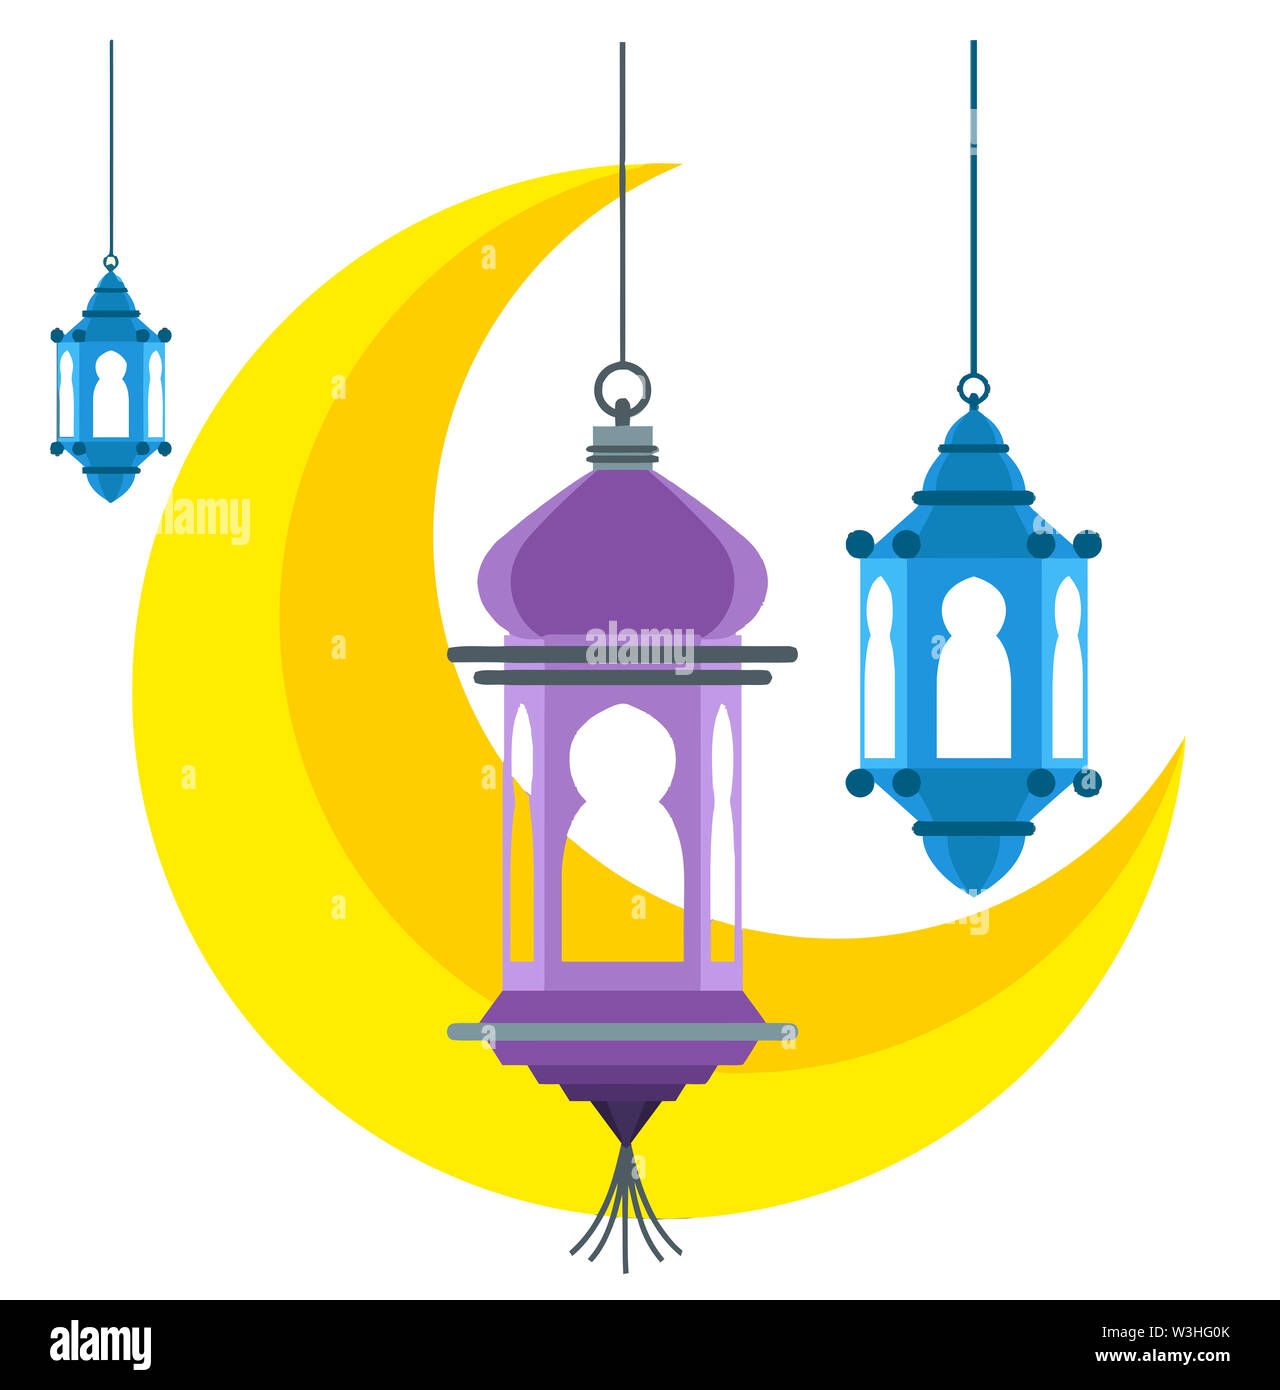 Ramadan kareem culture traditionnelle lanterne musulmane lune illustration Banque D'Images